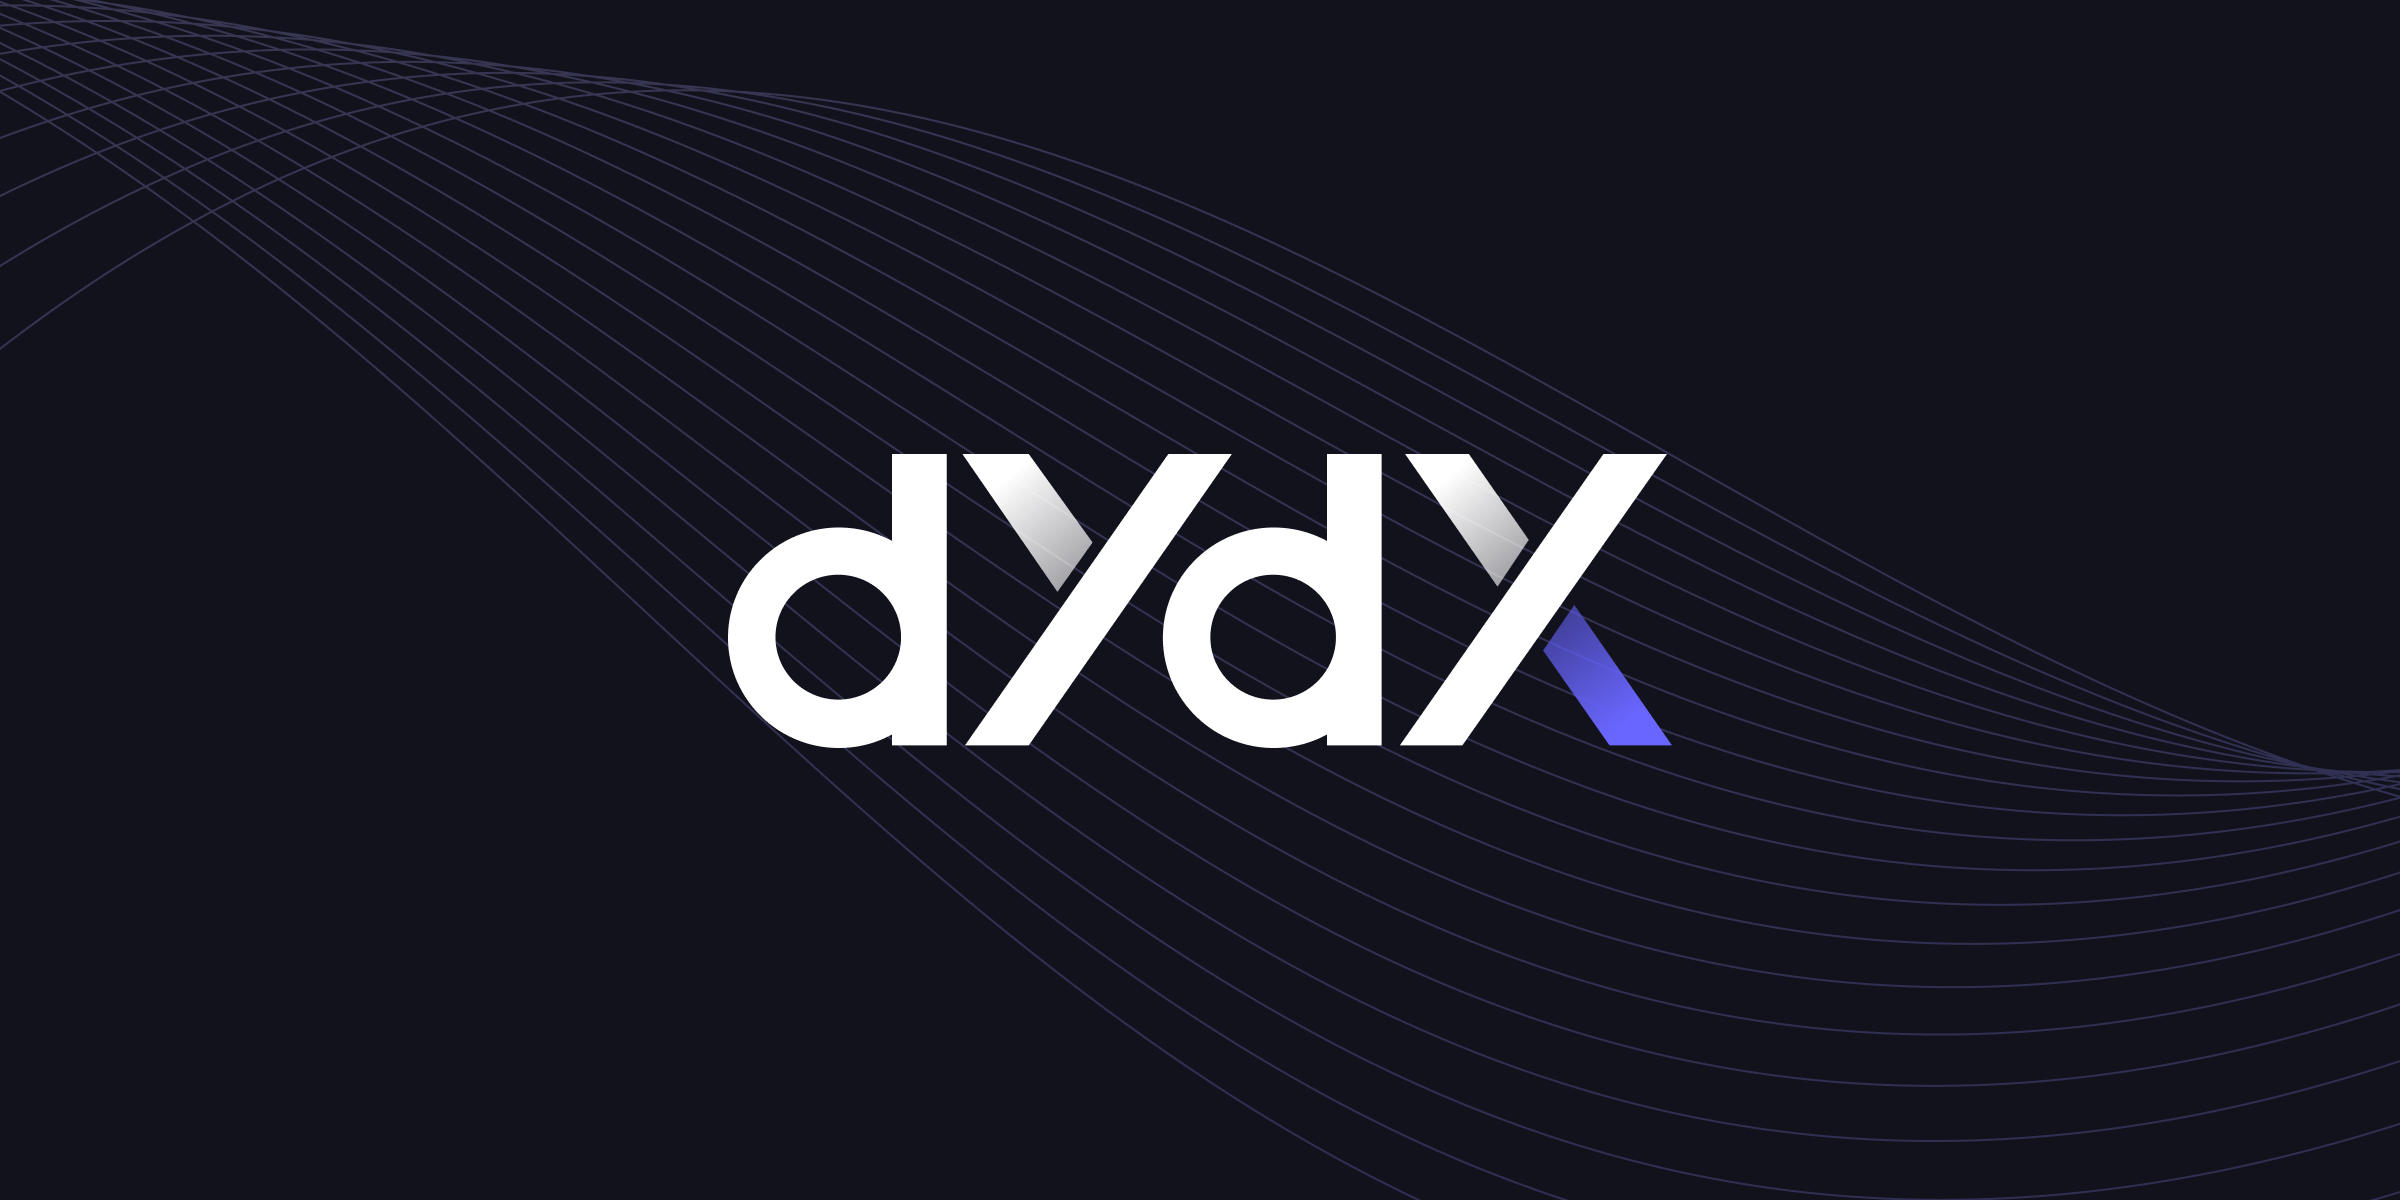 DYdX to unlock 6.52M tokens worth $14M for community treasury, rewards